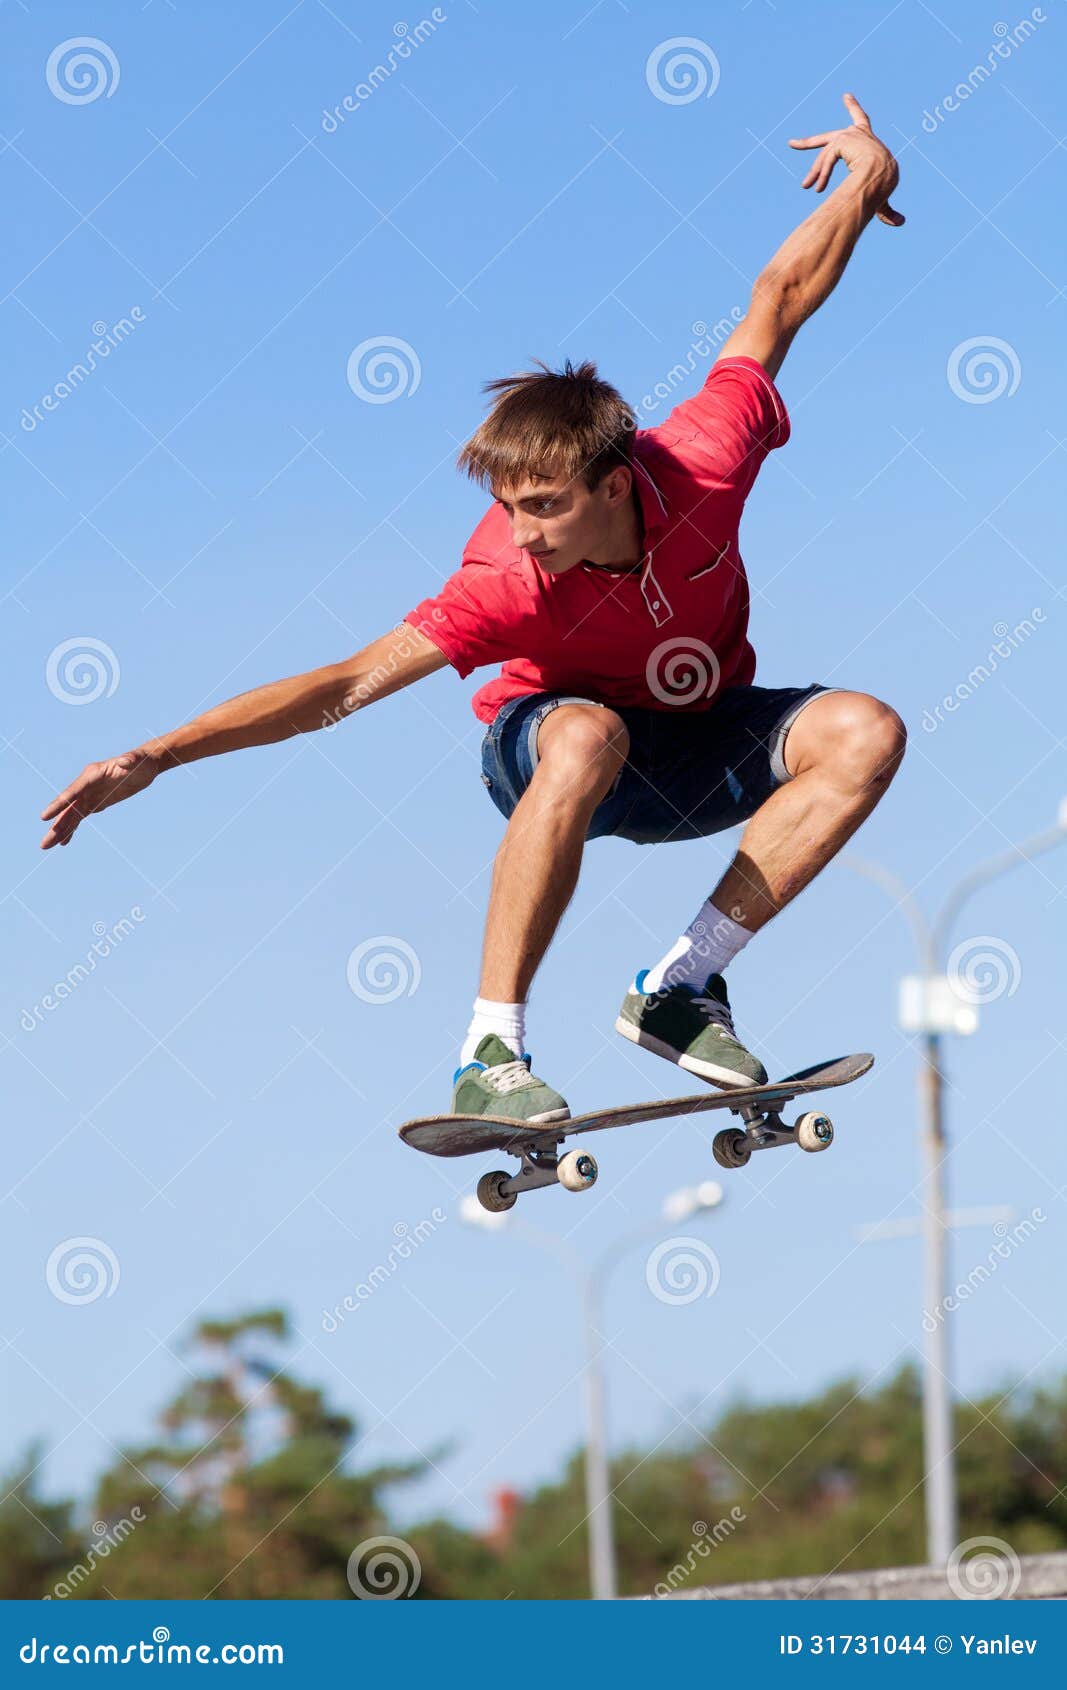 skateboard stock photo. Image of risk, - 31731044